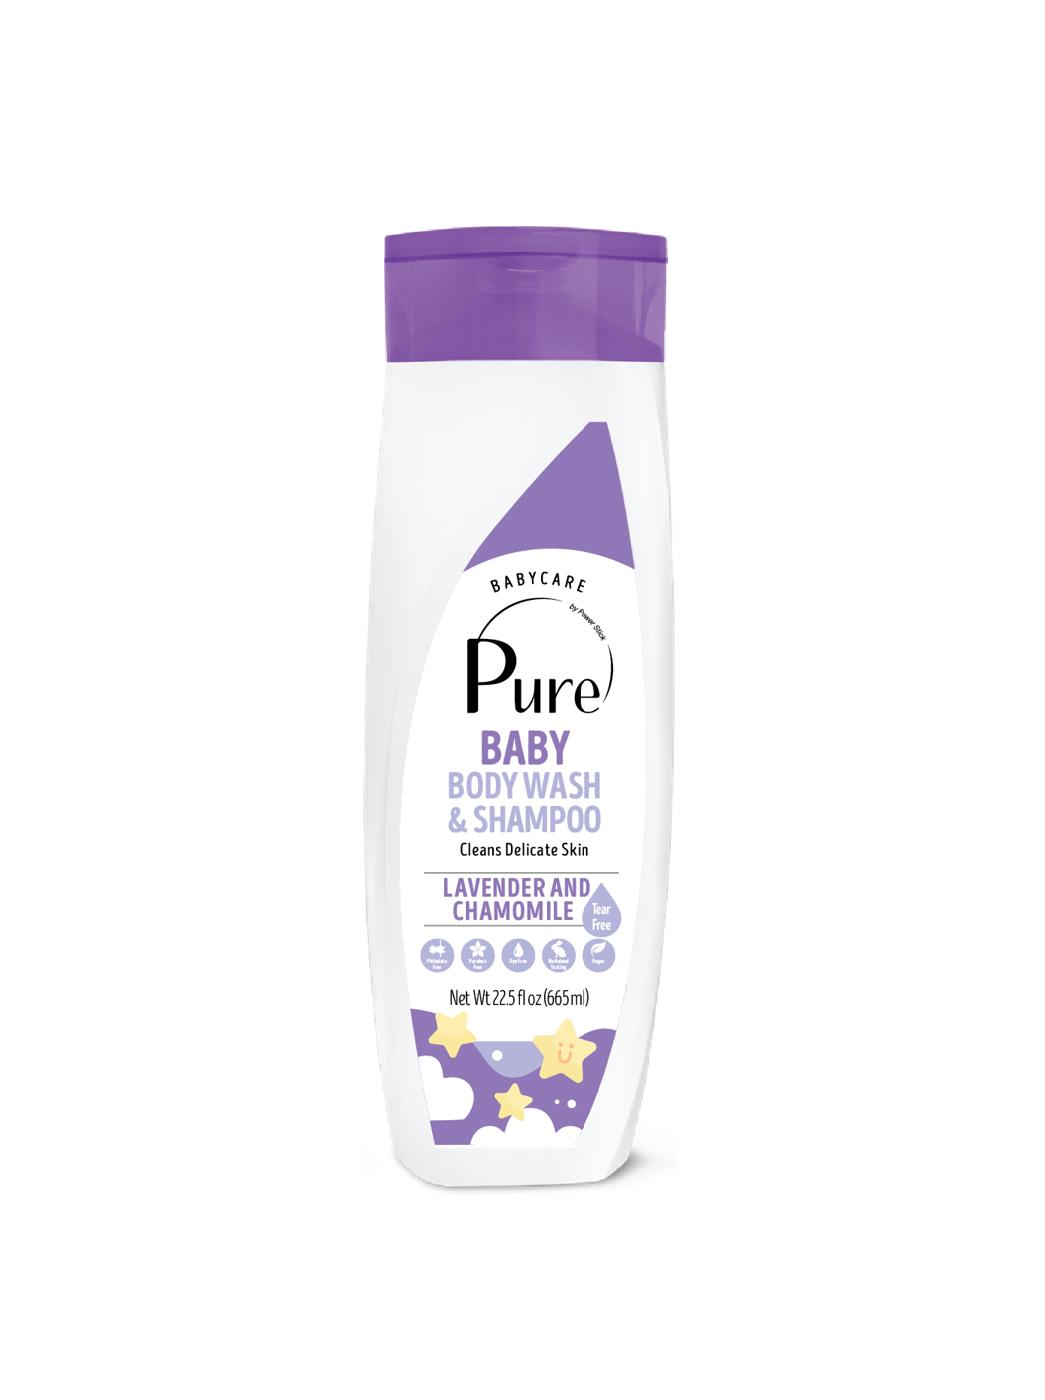 Pure Baby Body Wash & Shampoo - Lavender & Chamomile; image 1 of 2